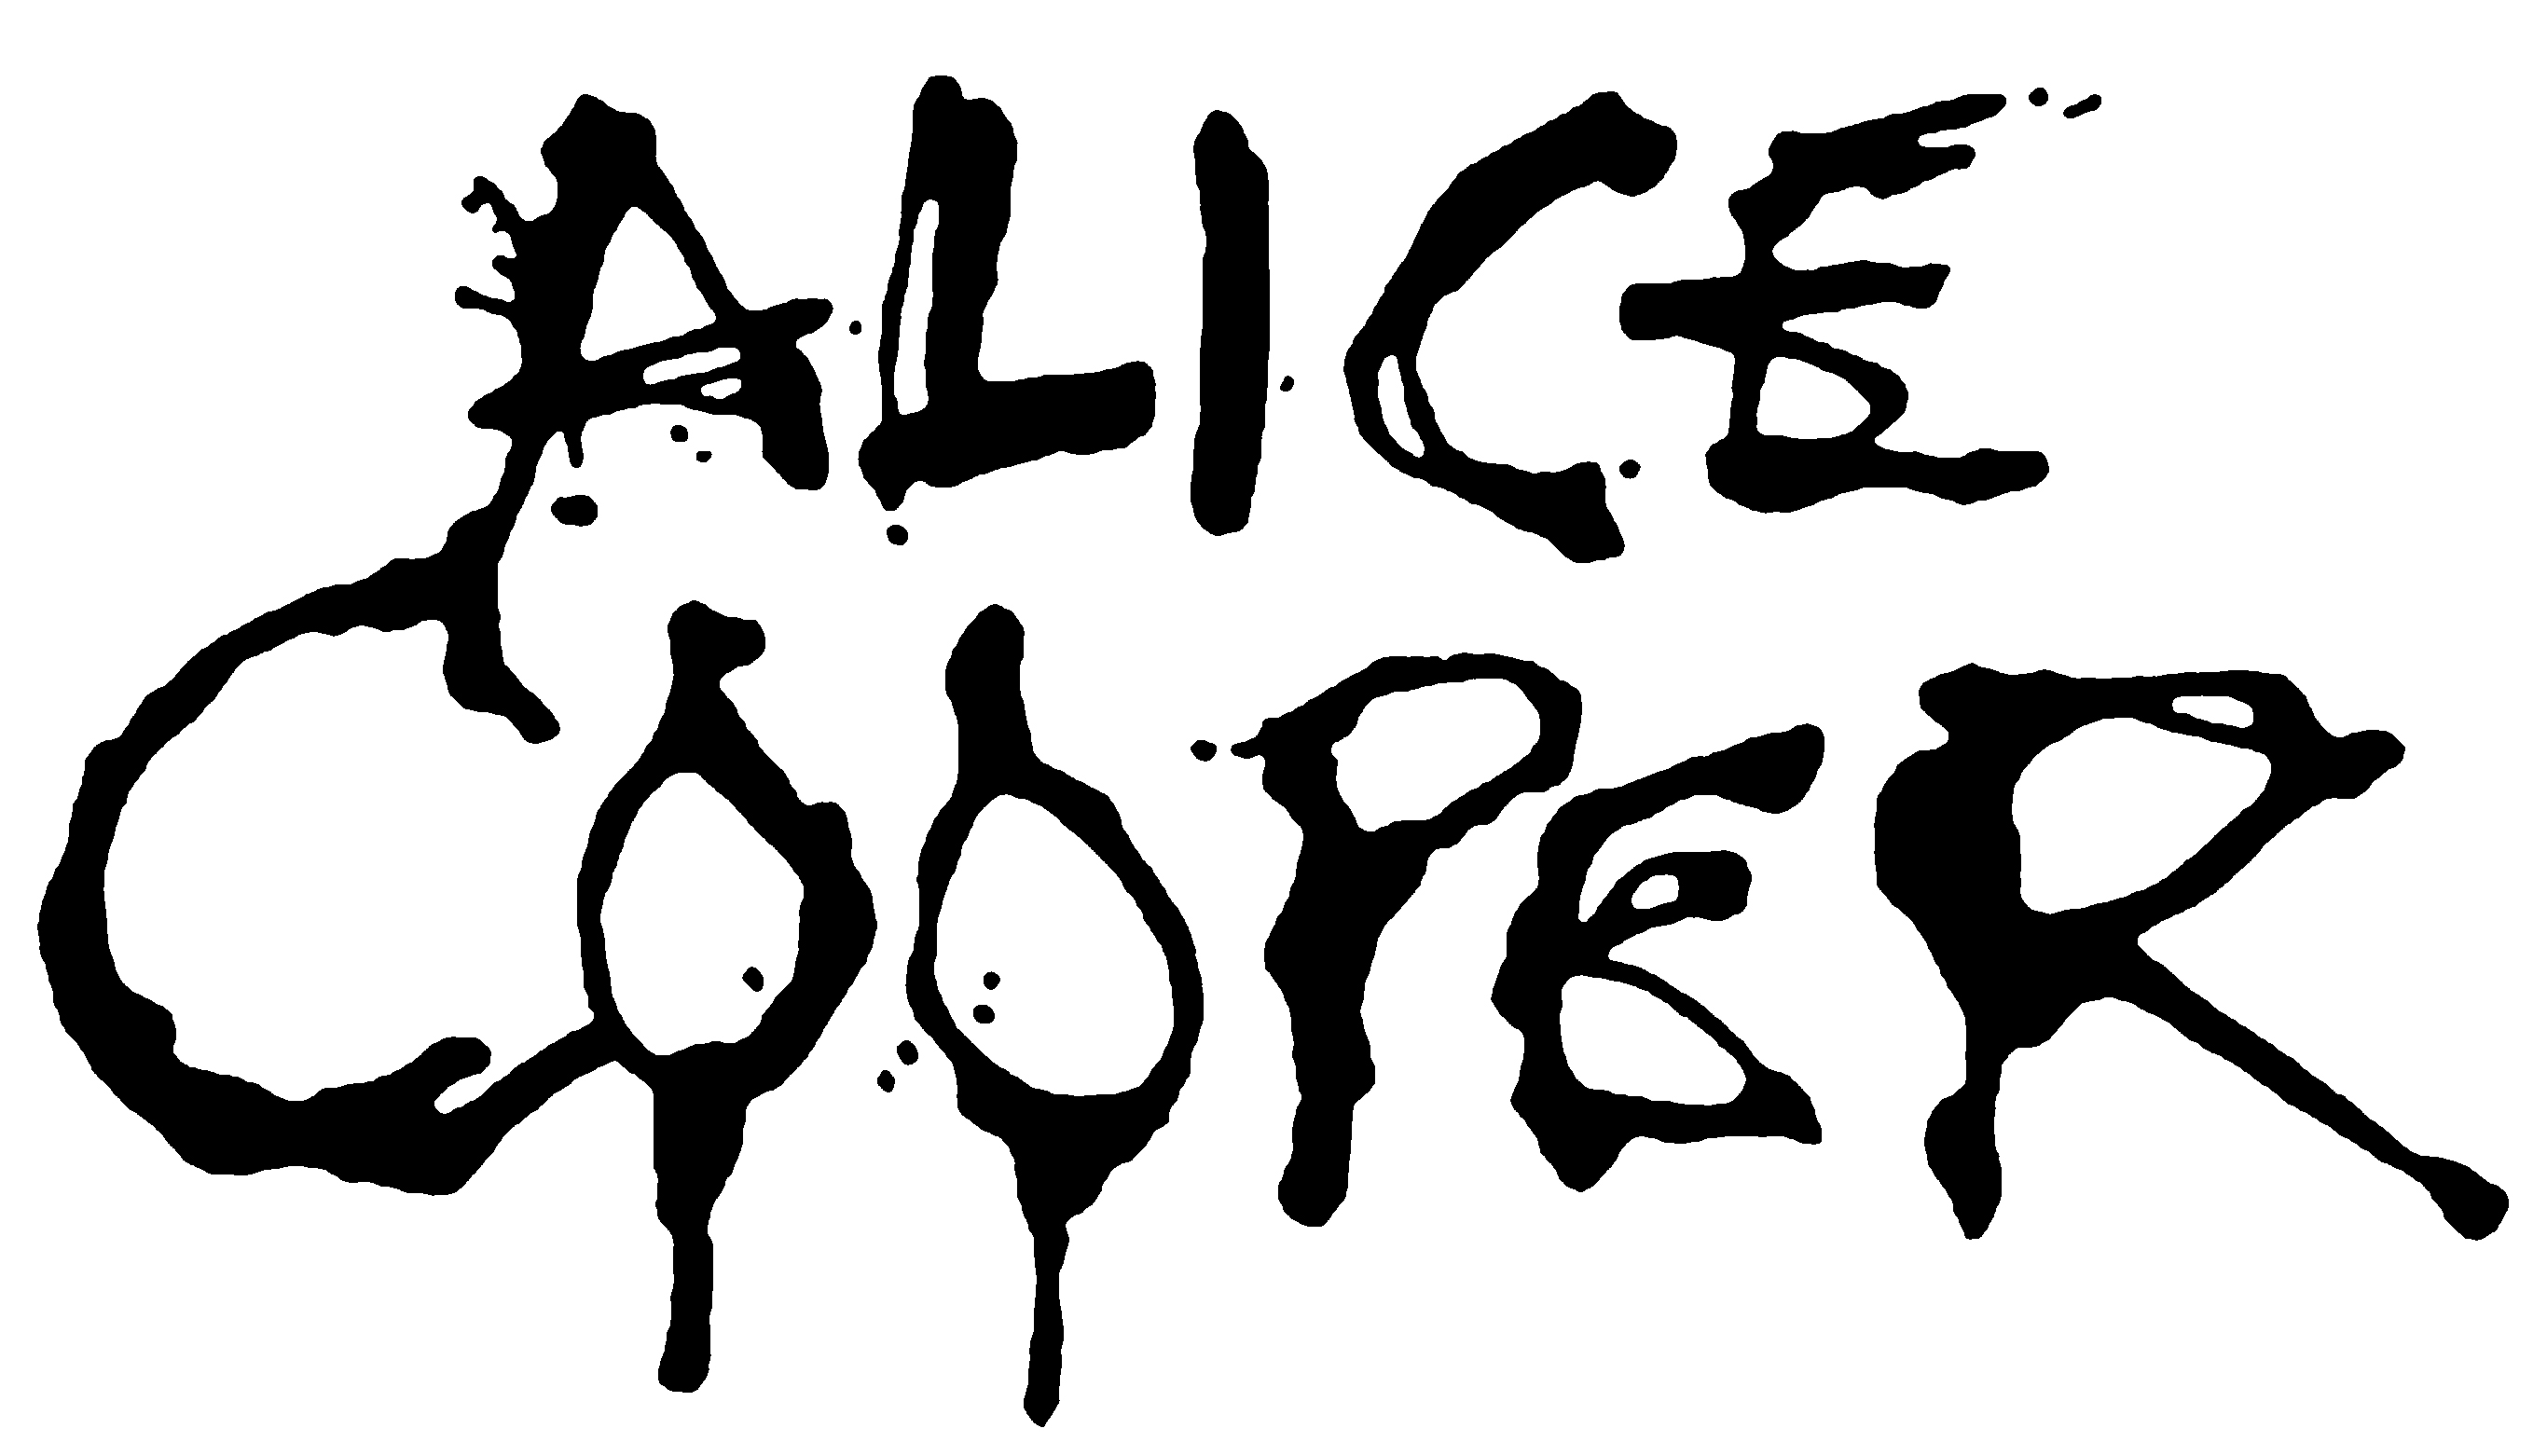 Alice Cooper Announces Summer 2019 Tour Dates With Halestorm